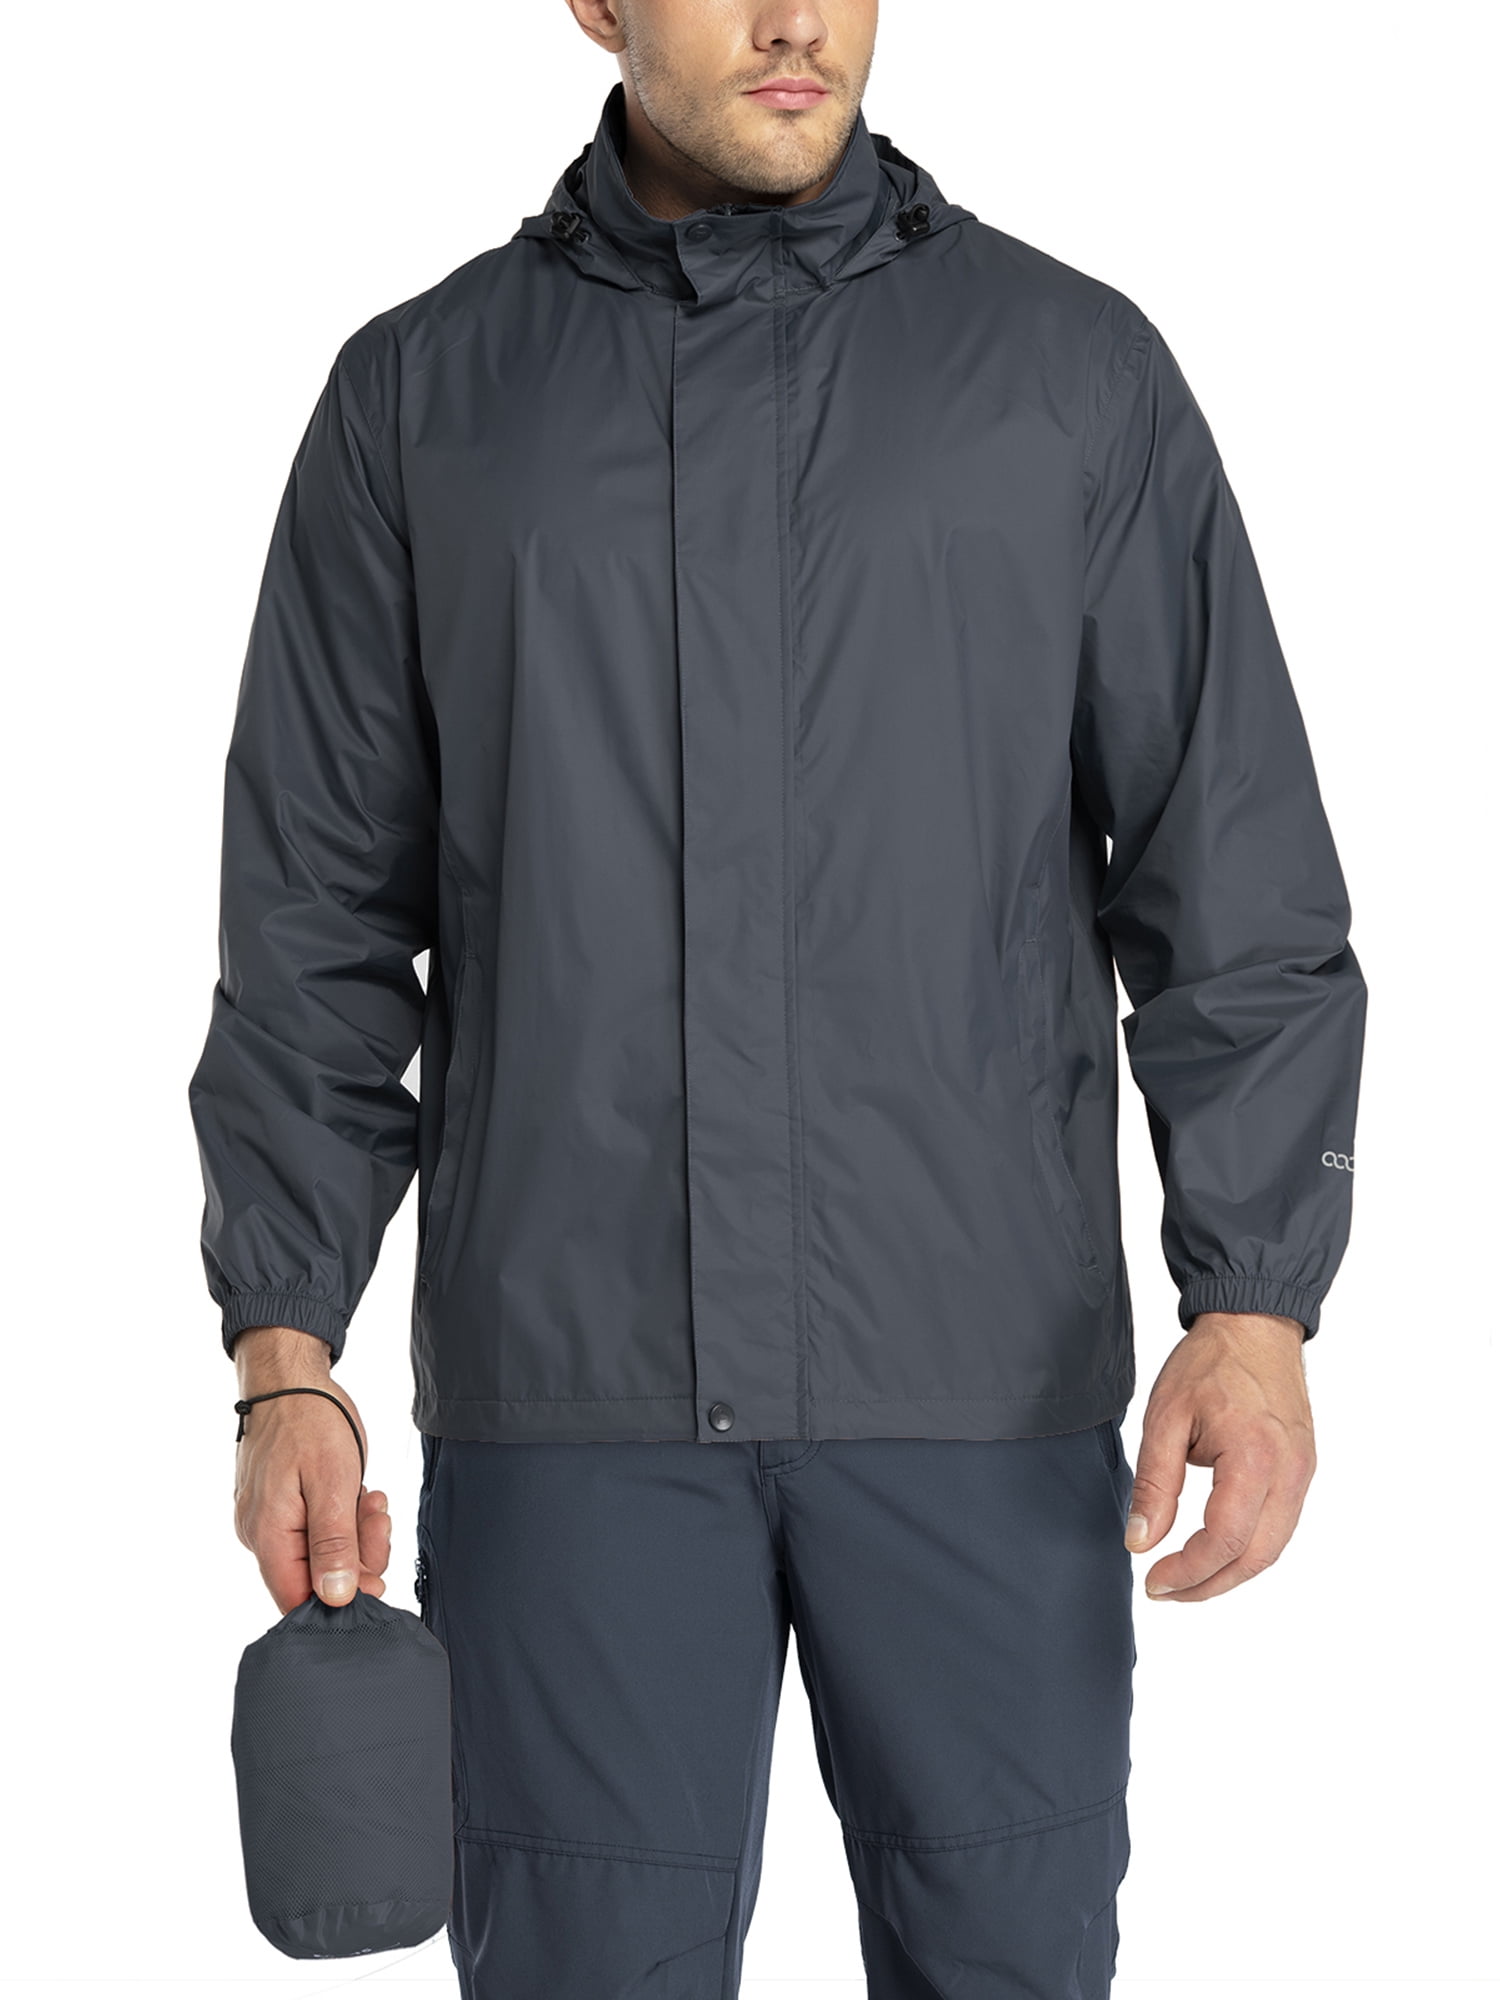 33,000ft Men's Packable Rain Jacket Hooded Lightweight Waterproof Rain  Shell Jacket Raincoat for Hiking Golf Cycling 